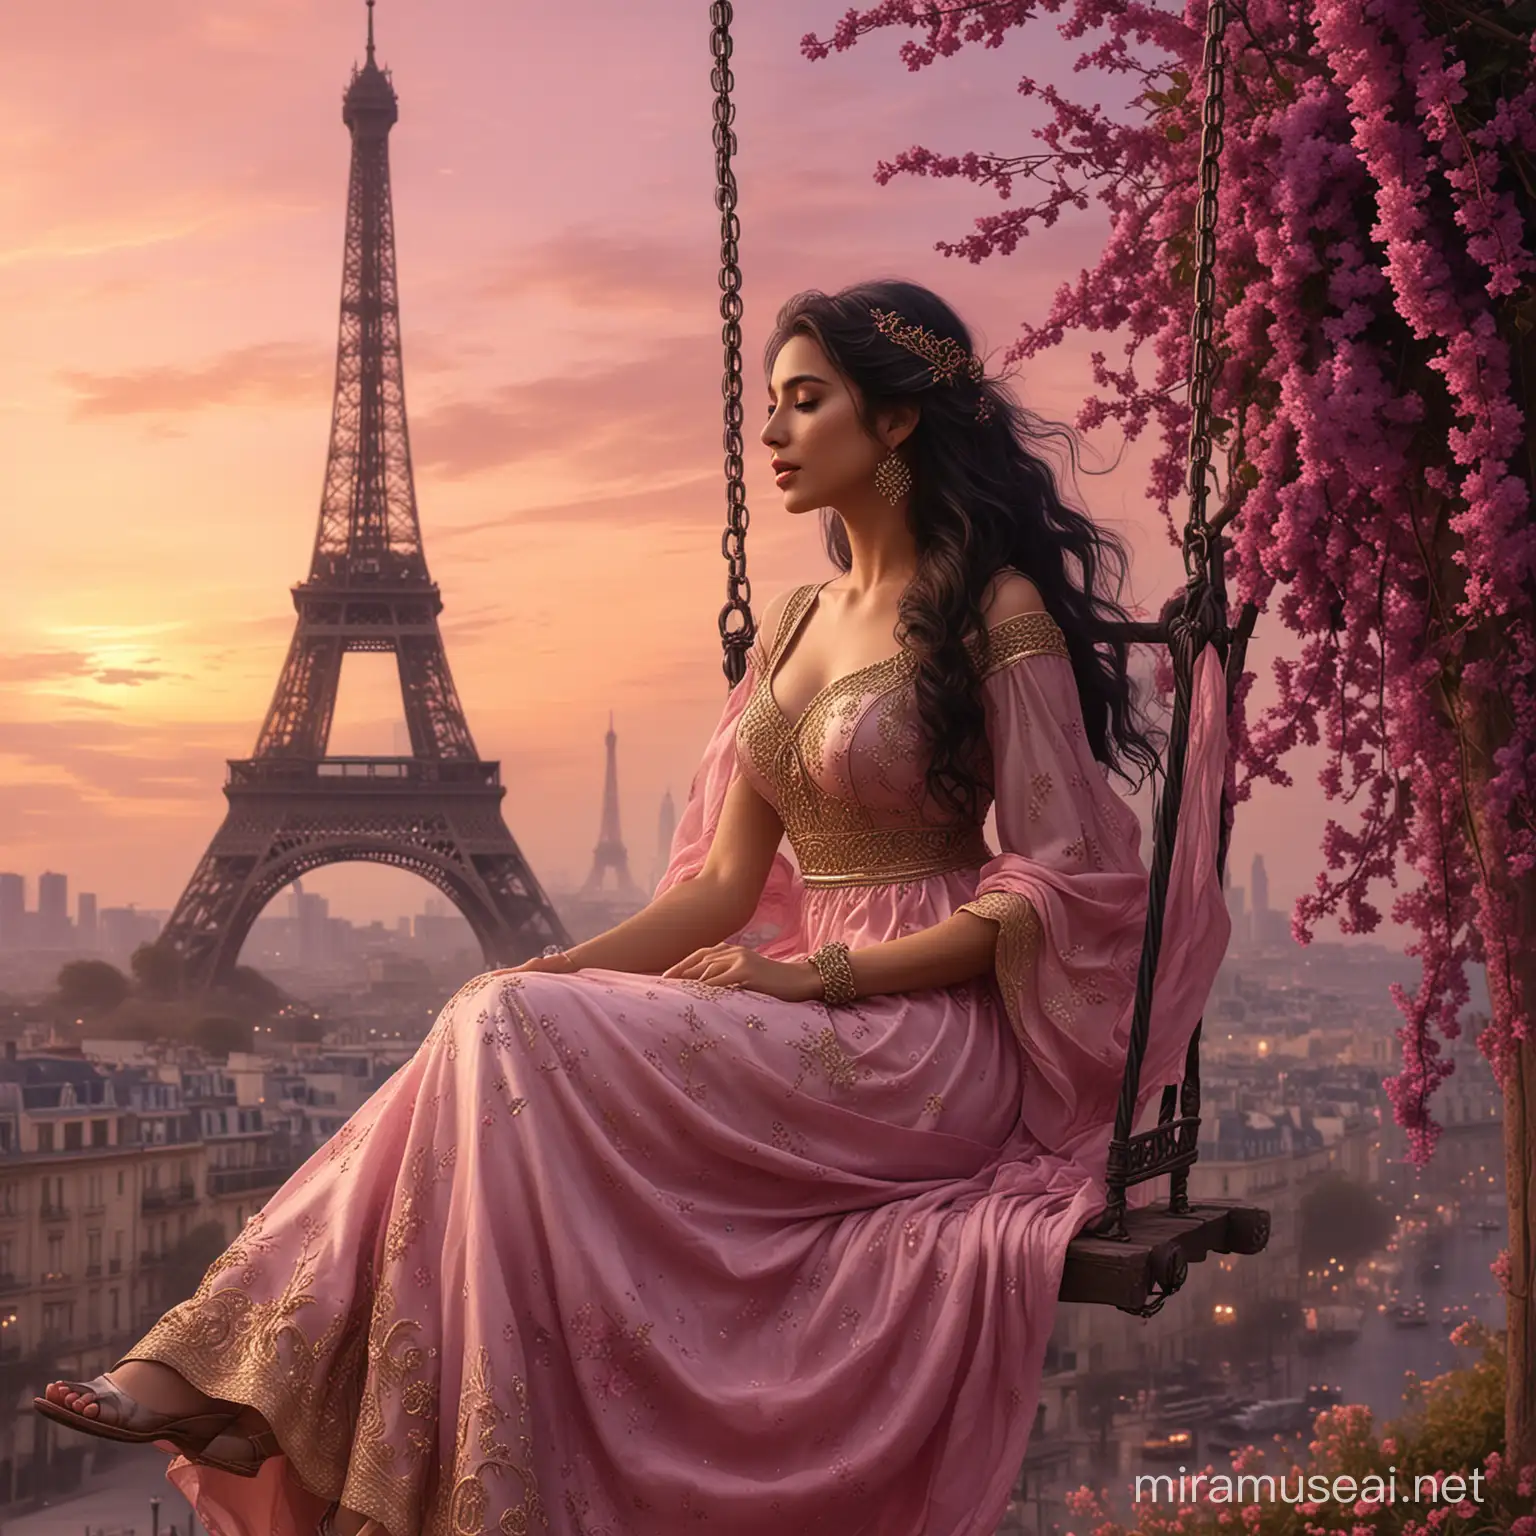 Elegant Woman on Swing in Fantasy Eiffel Tower Setting Surrounded by Dark Purple Flowers